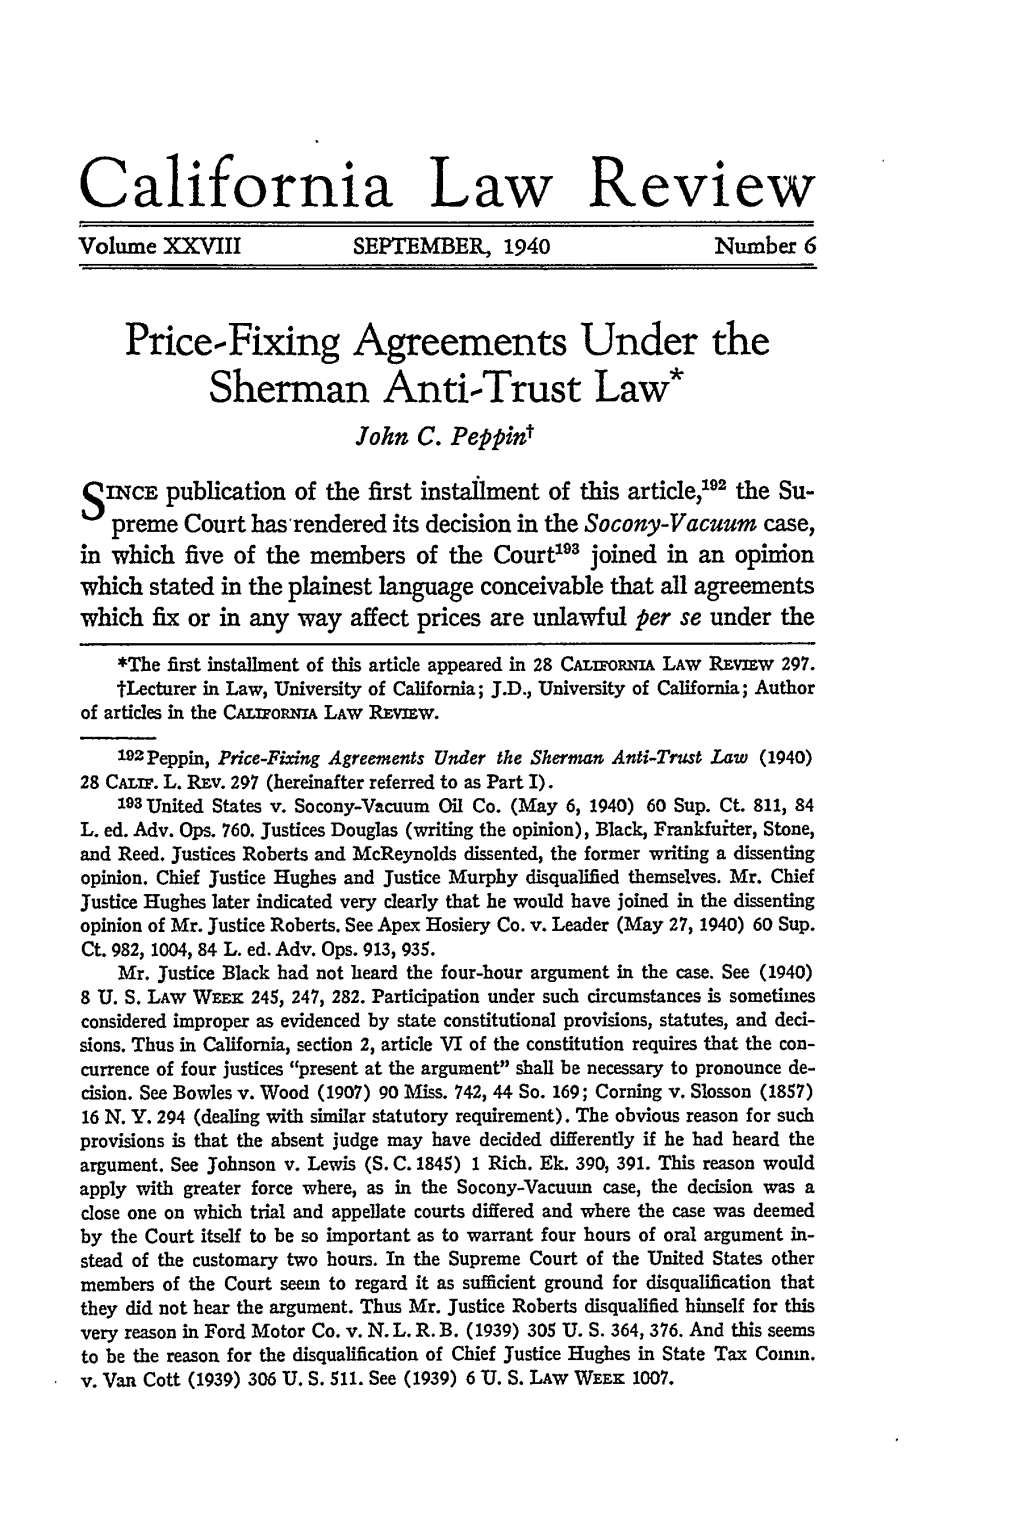 Price-Fixing Agreements Under the Sherman Anti-Trust Law* John C